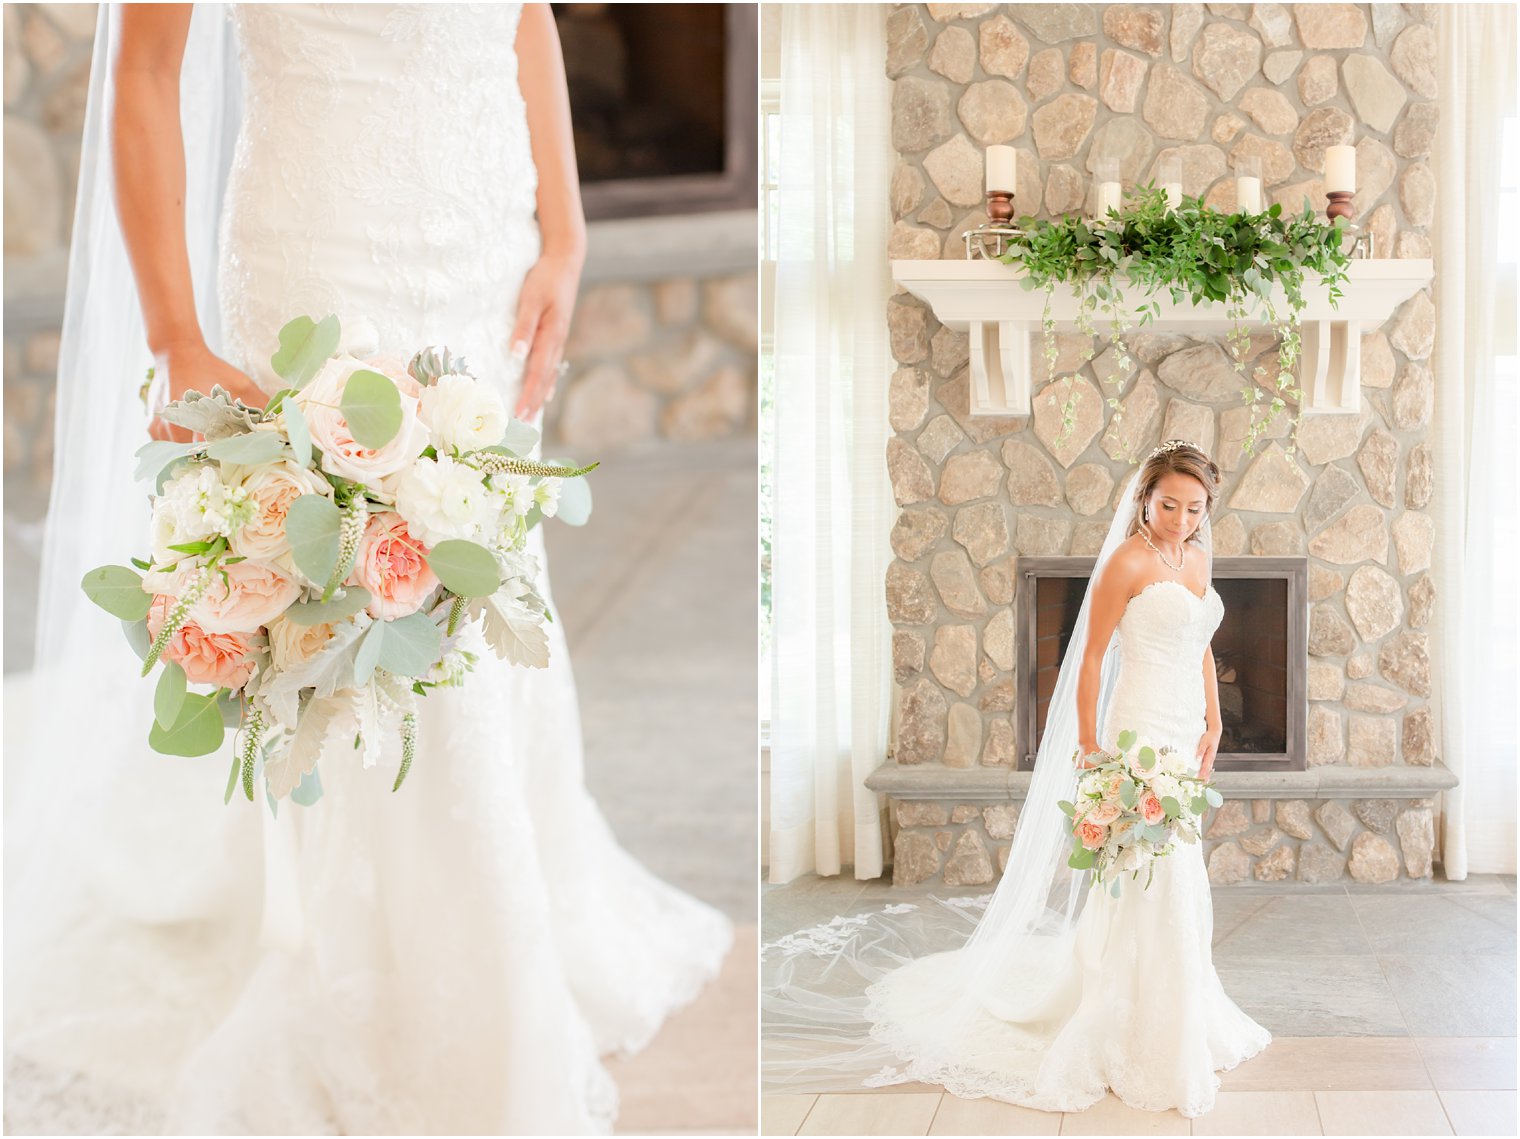 Wedding bouquets by Laurelwood Designs